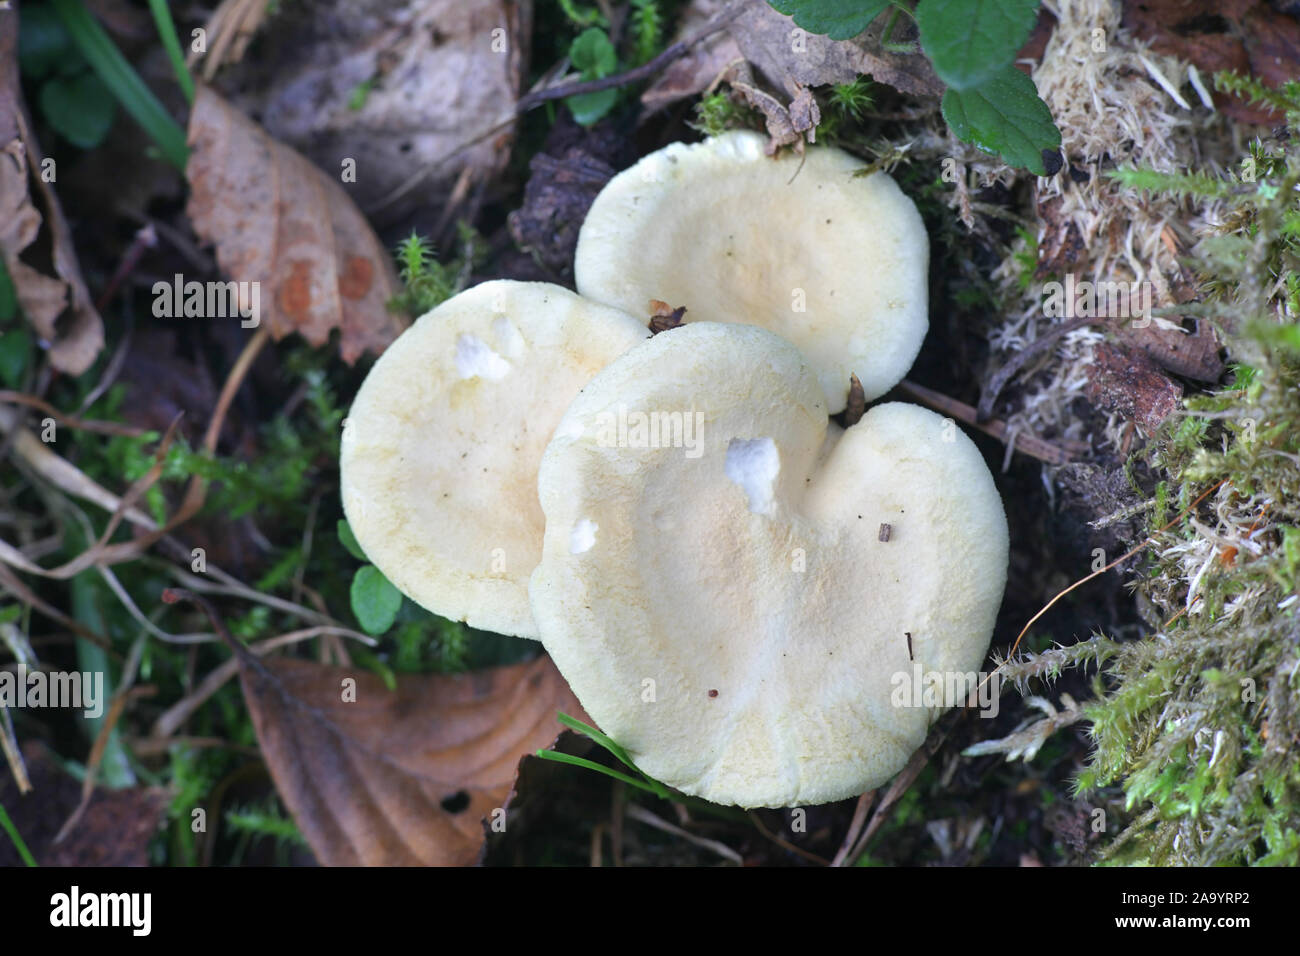 Hygrophoropsis pallida or H. aurantiaca var. macrospora, known as the false chanterelle, wild mushroom from Finland Stock Photo